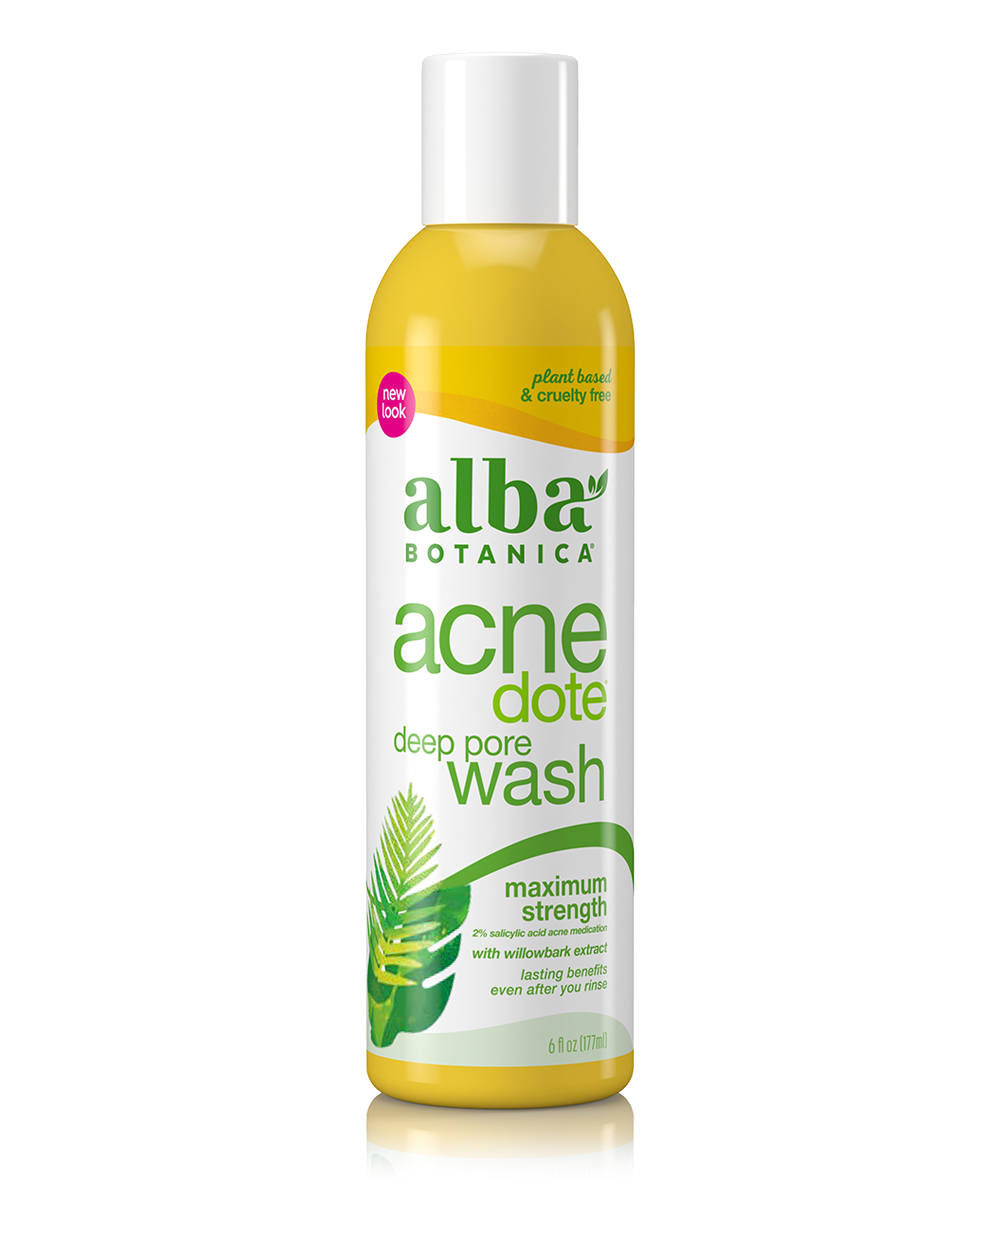 acnedote deep pore wash